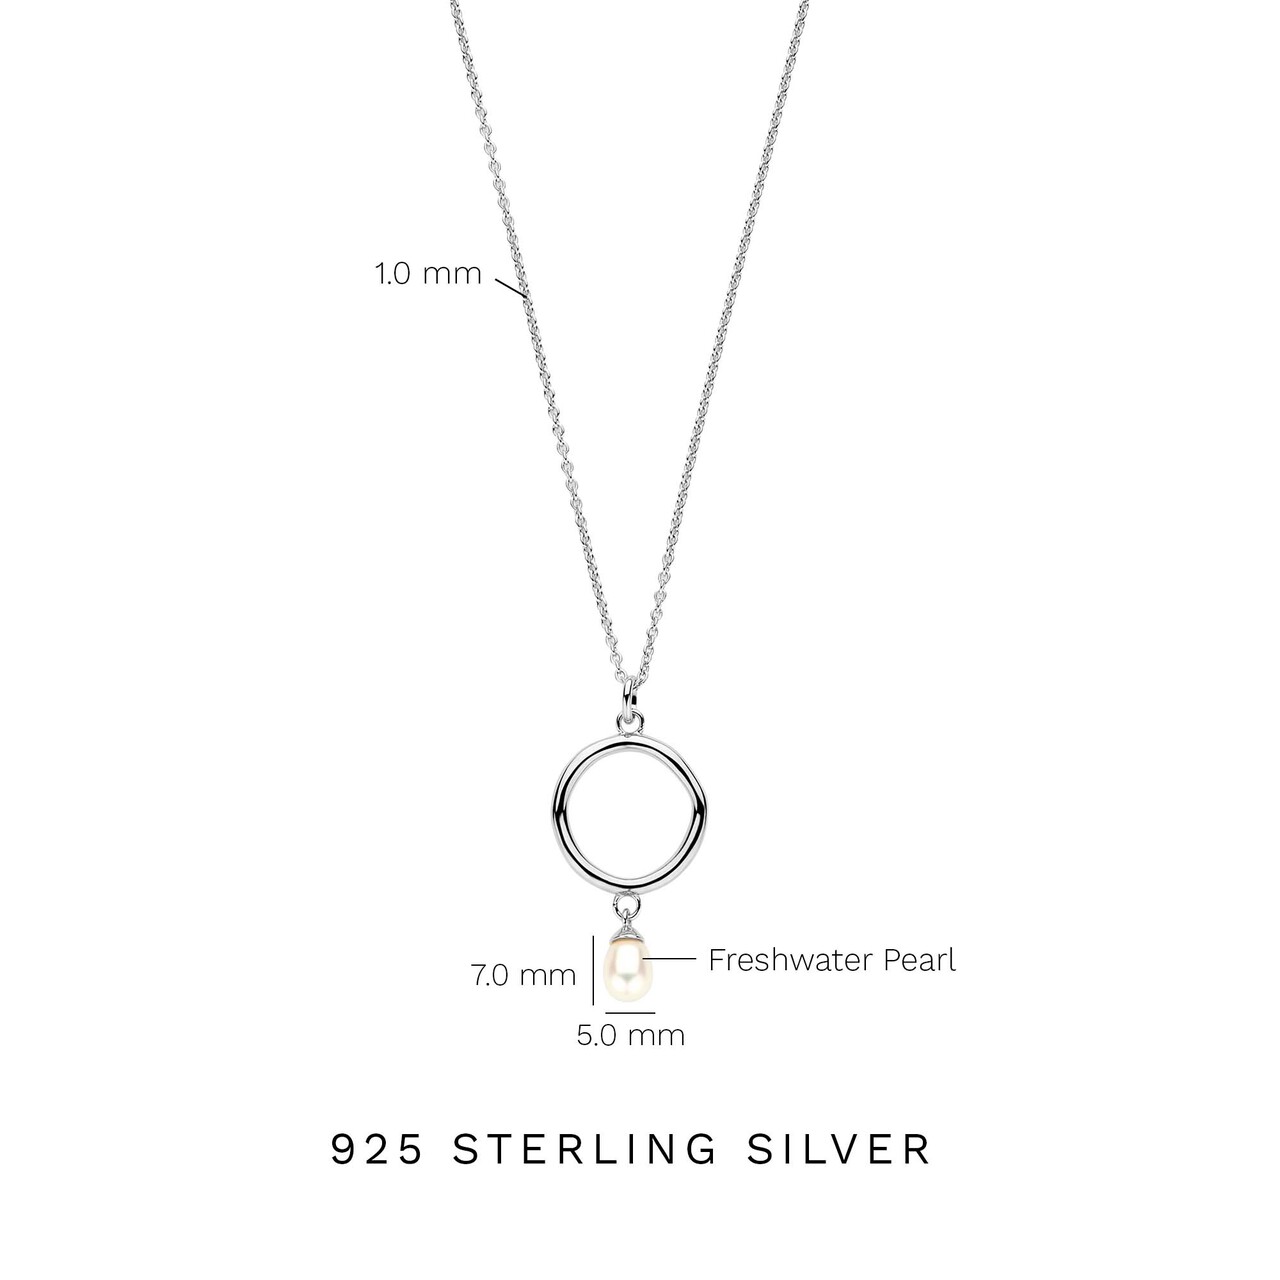 Me sterling - Di necklace PDM34041 Parte 925 silver